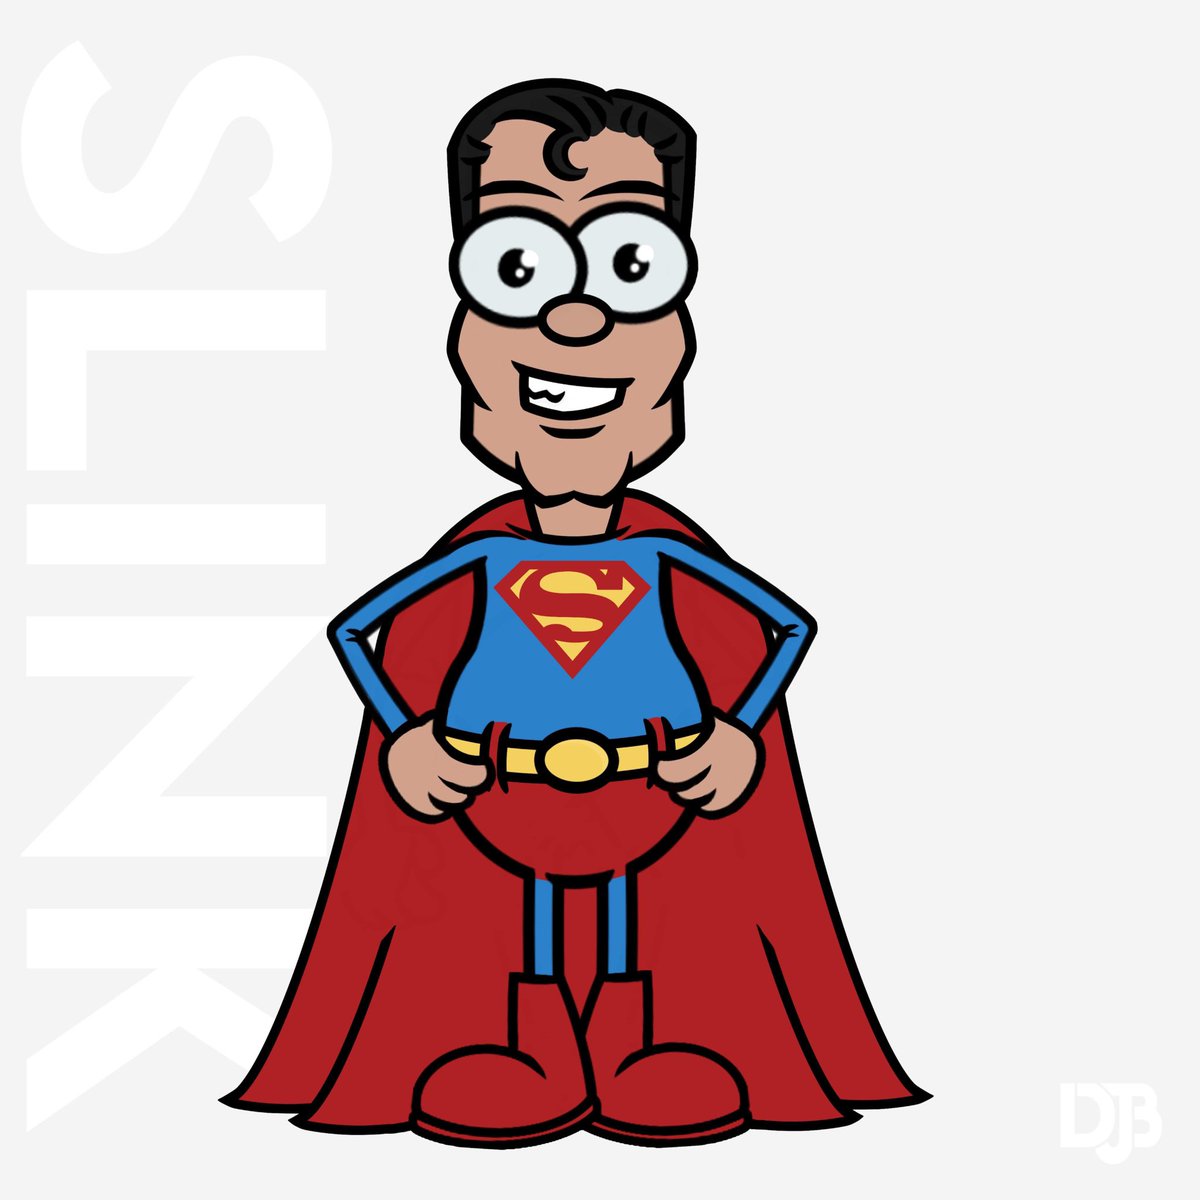 Superman got SLINKd #superman #supermanthemovie #clarkkent #christopherreeve #richarddonner #manofsteel #dccomics #superheroes #slink #slinkd #djbu #artistofinstagram #artwork #artist #characterdesign